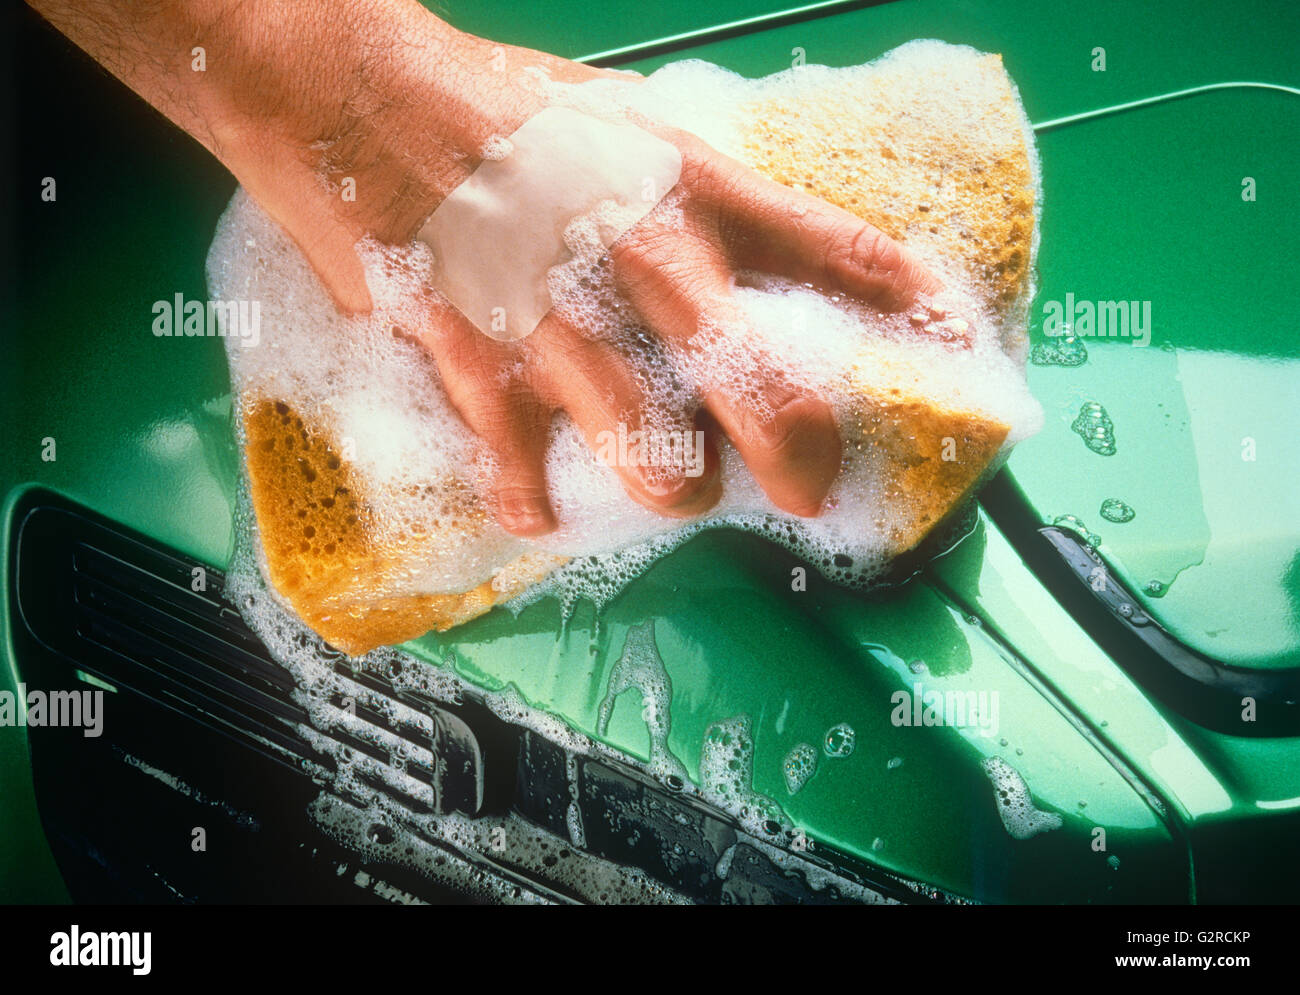 A mans hand washing a bright green car. Stock Photo